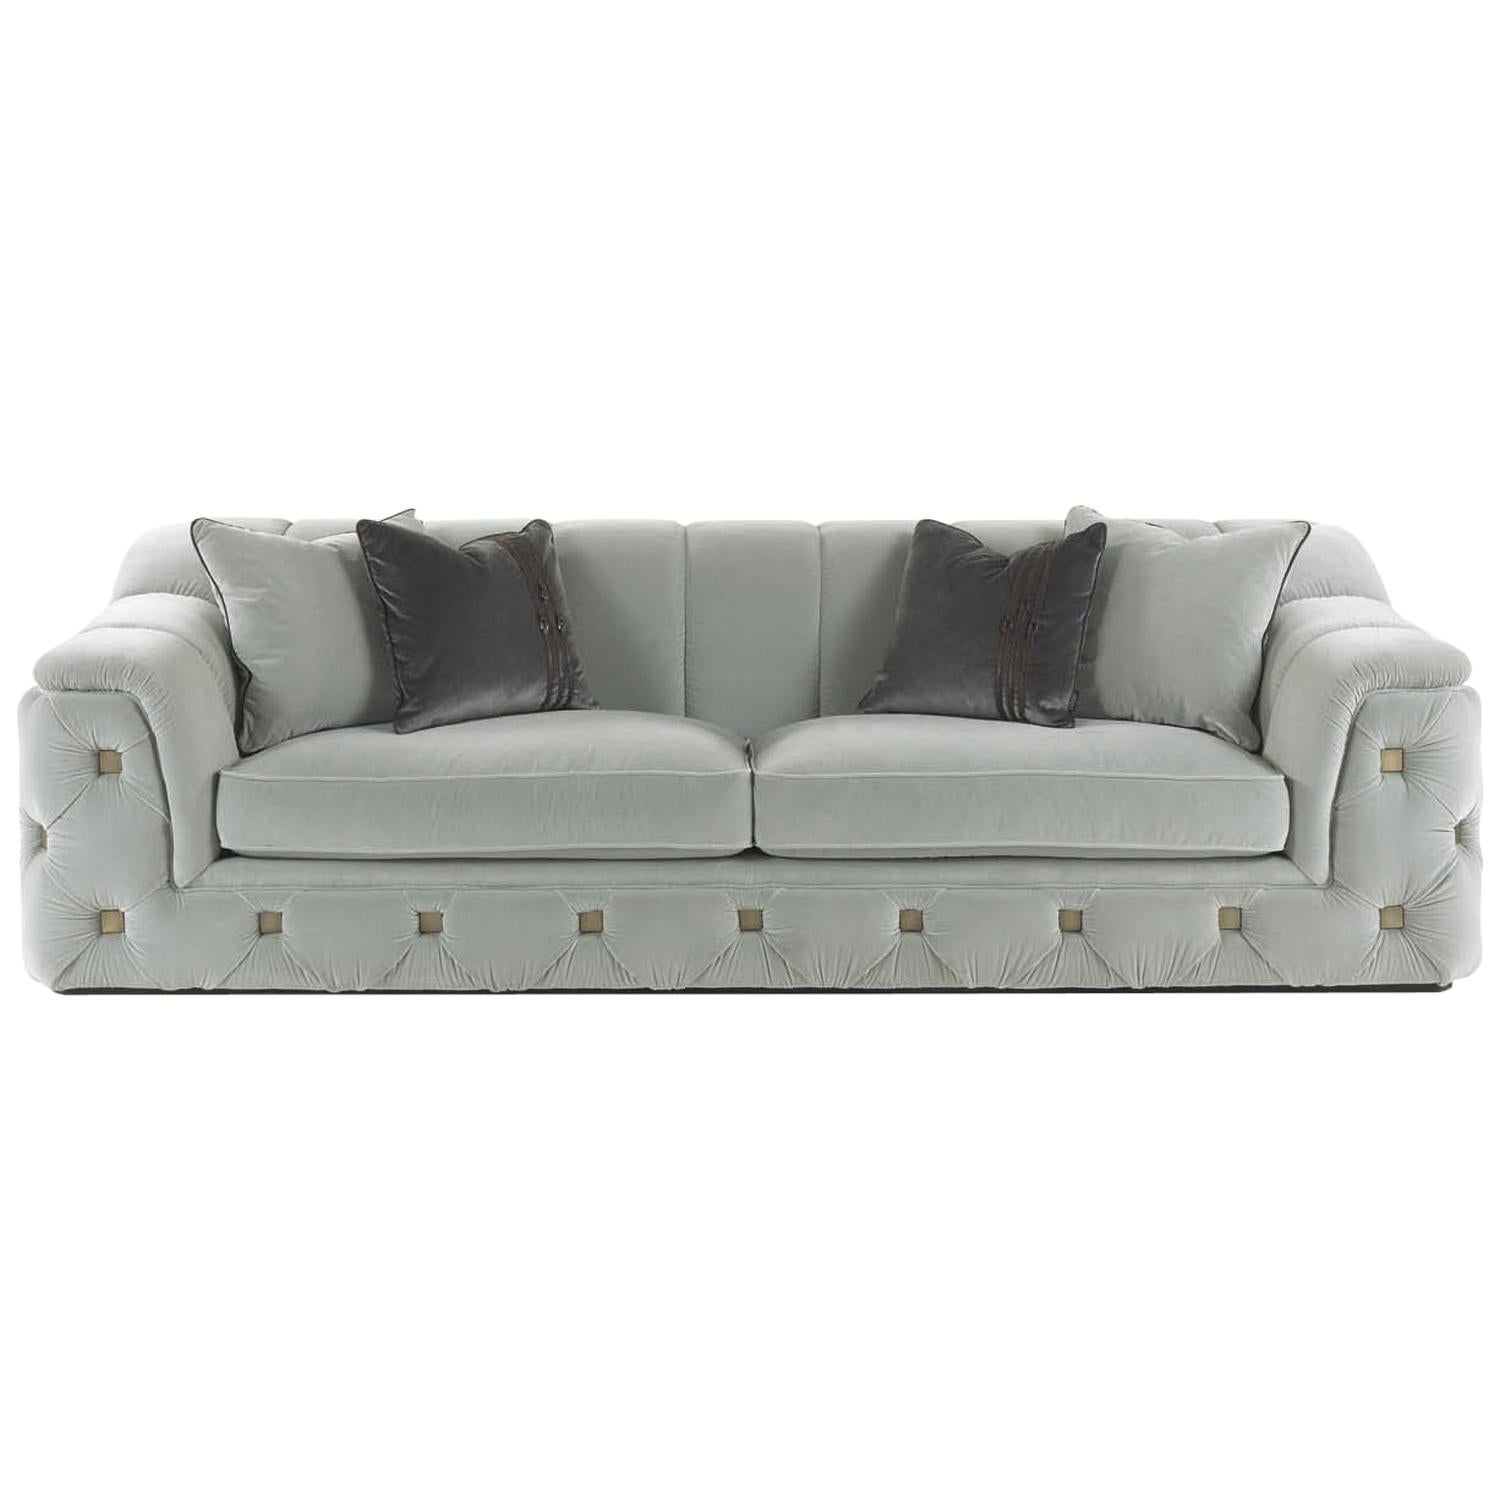 Gianfranco Ferre Hill Three-Seat Sofa in Light Grey Fabric For Sale